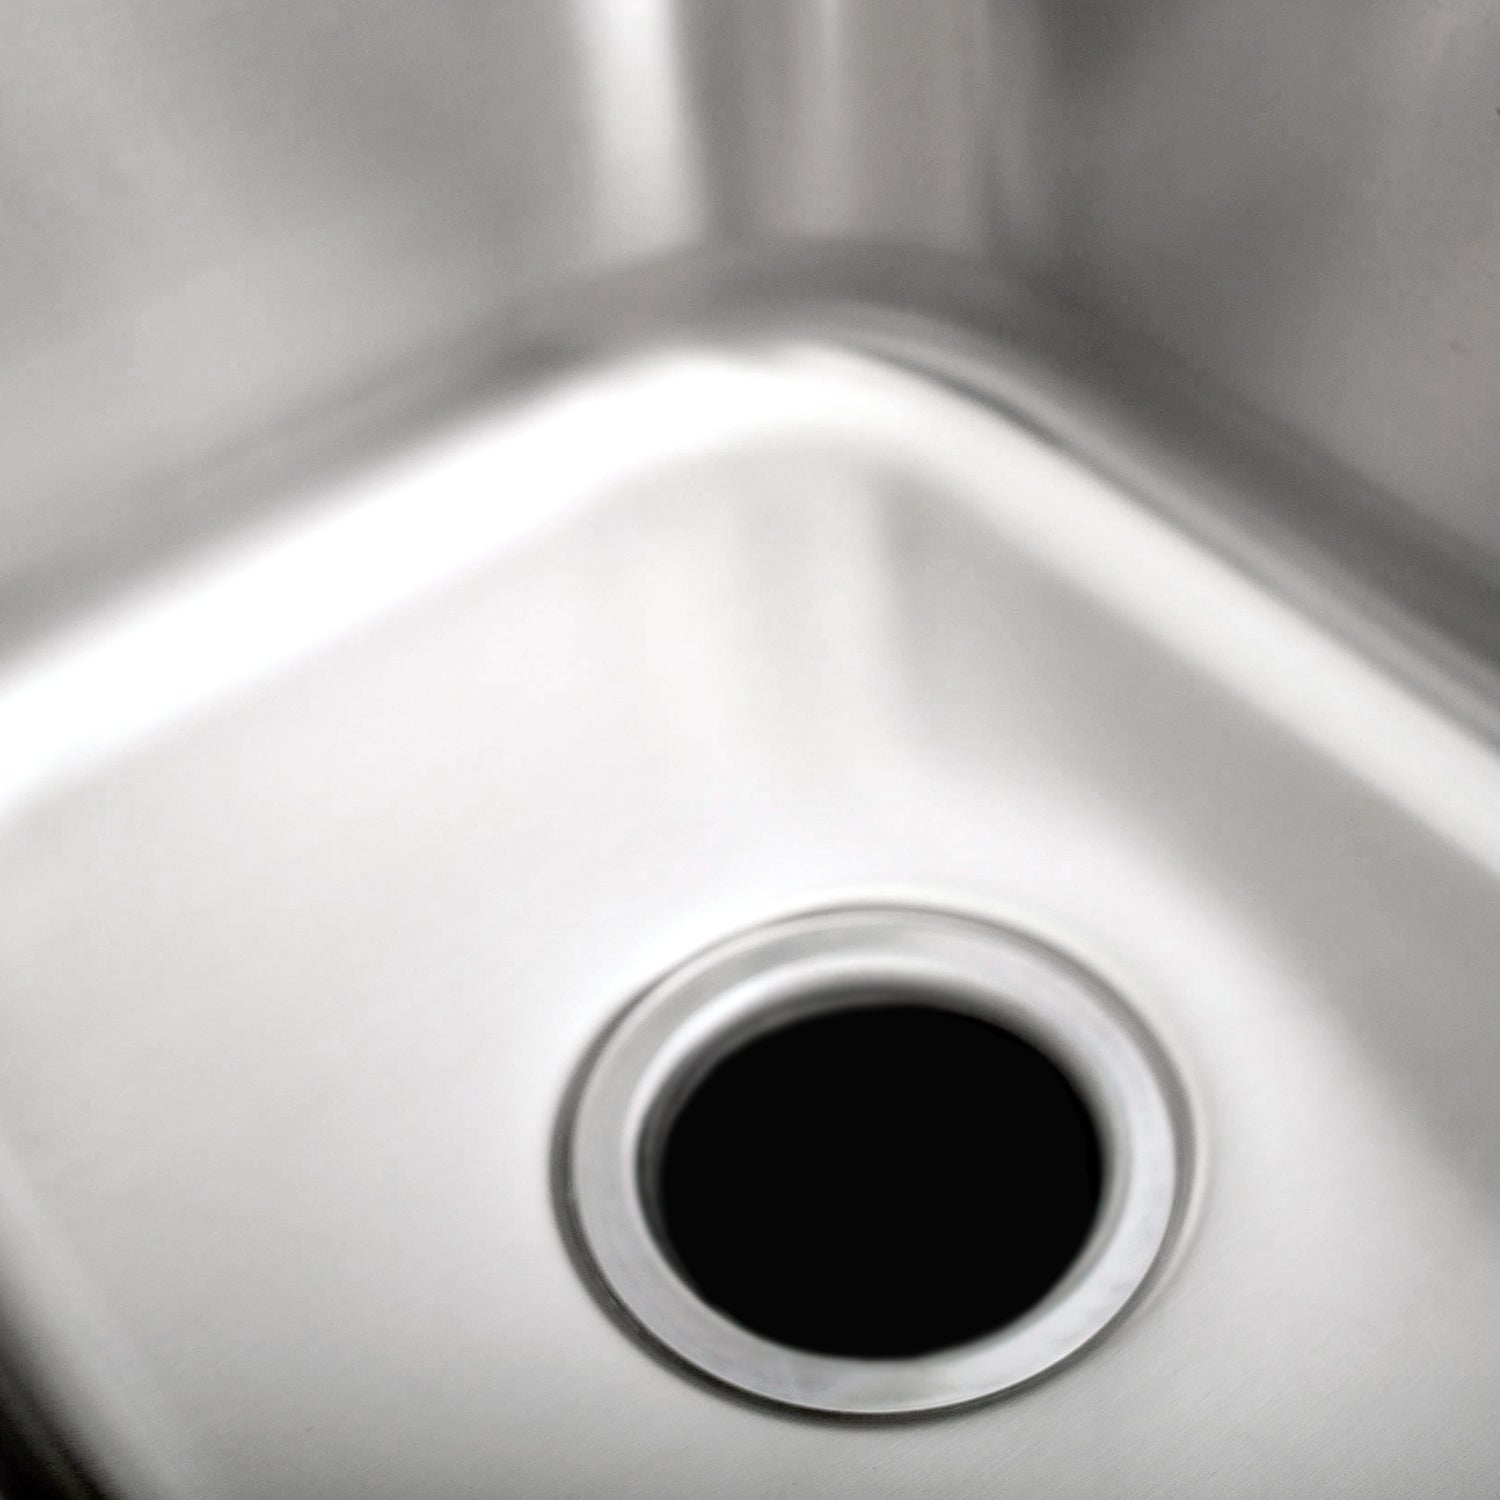 DAX Single Bowl Undermount Kitchen Sink, 18 Gauge Stainless Steel, Brushed Finish , 18 x 15 x 7 (DAX-1815)